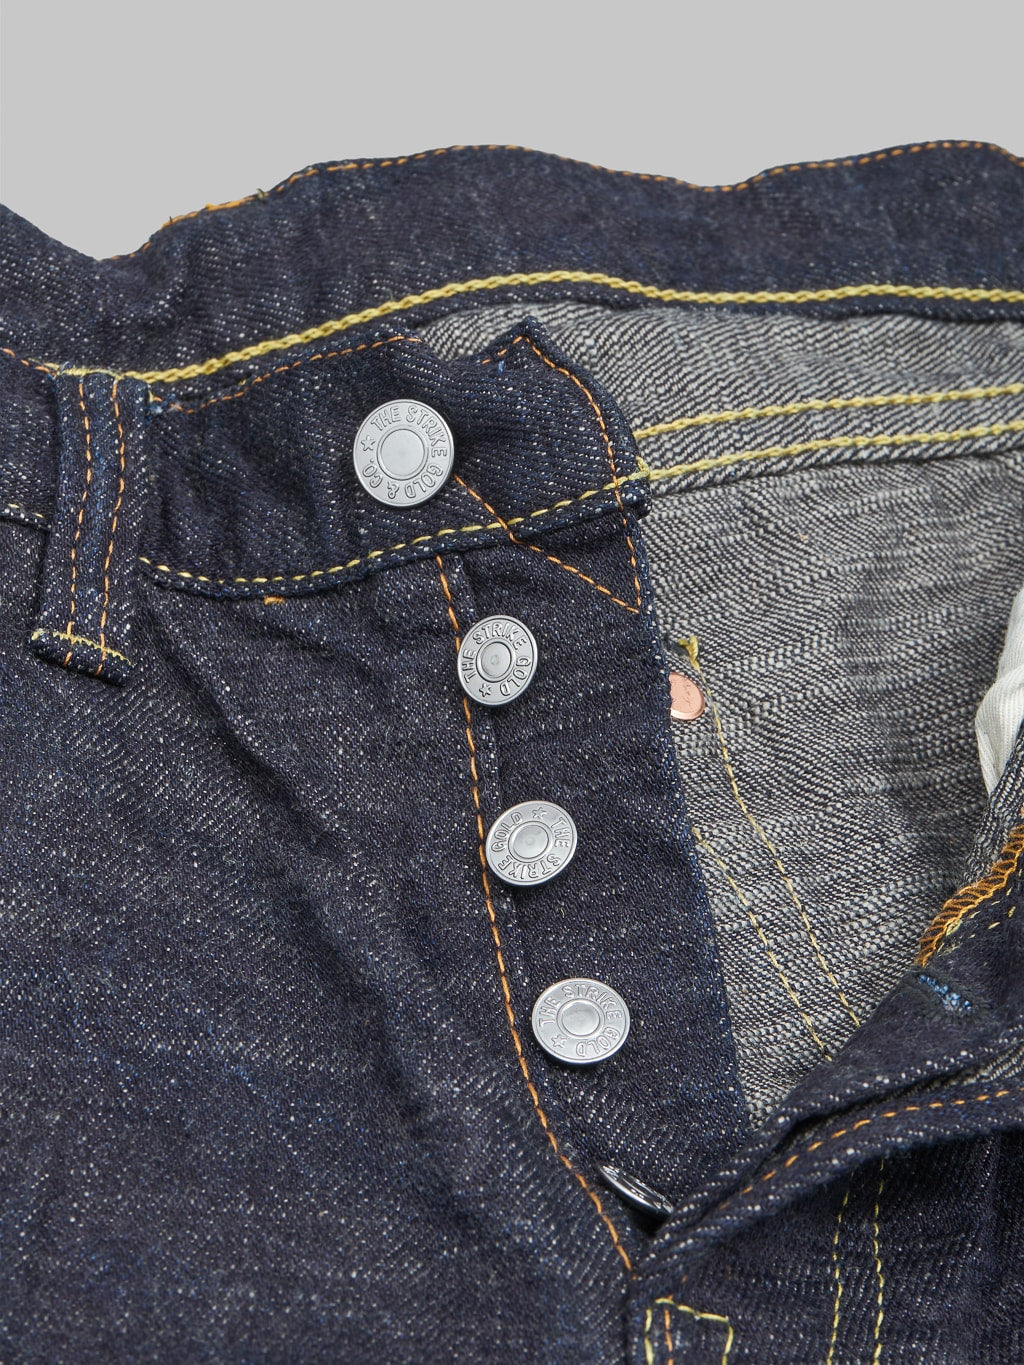 The Strike Gold 5109 15oz Slub Grey Weft Slim Tapered Jeans buttons